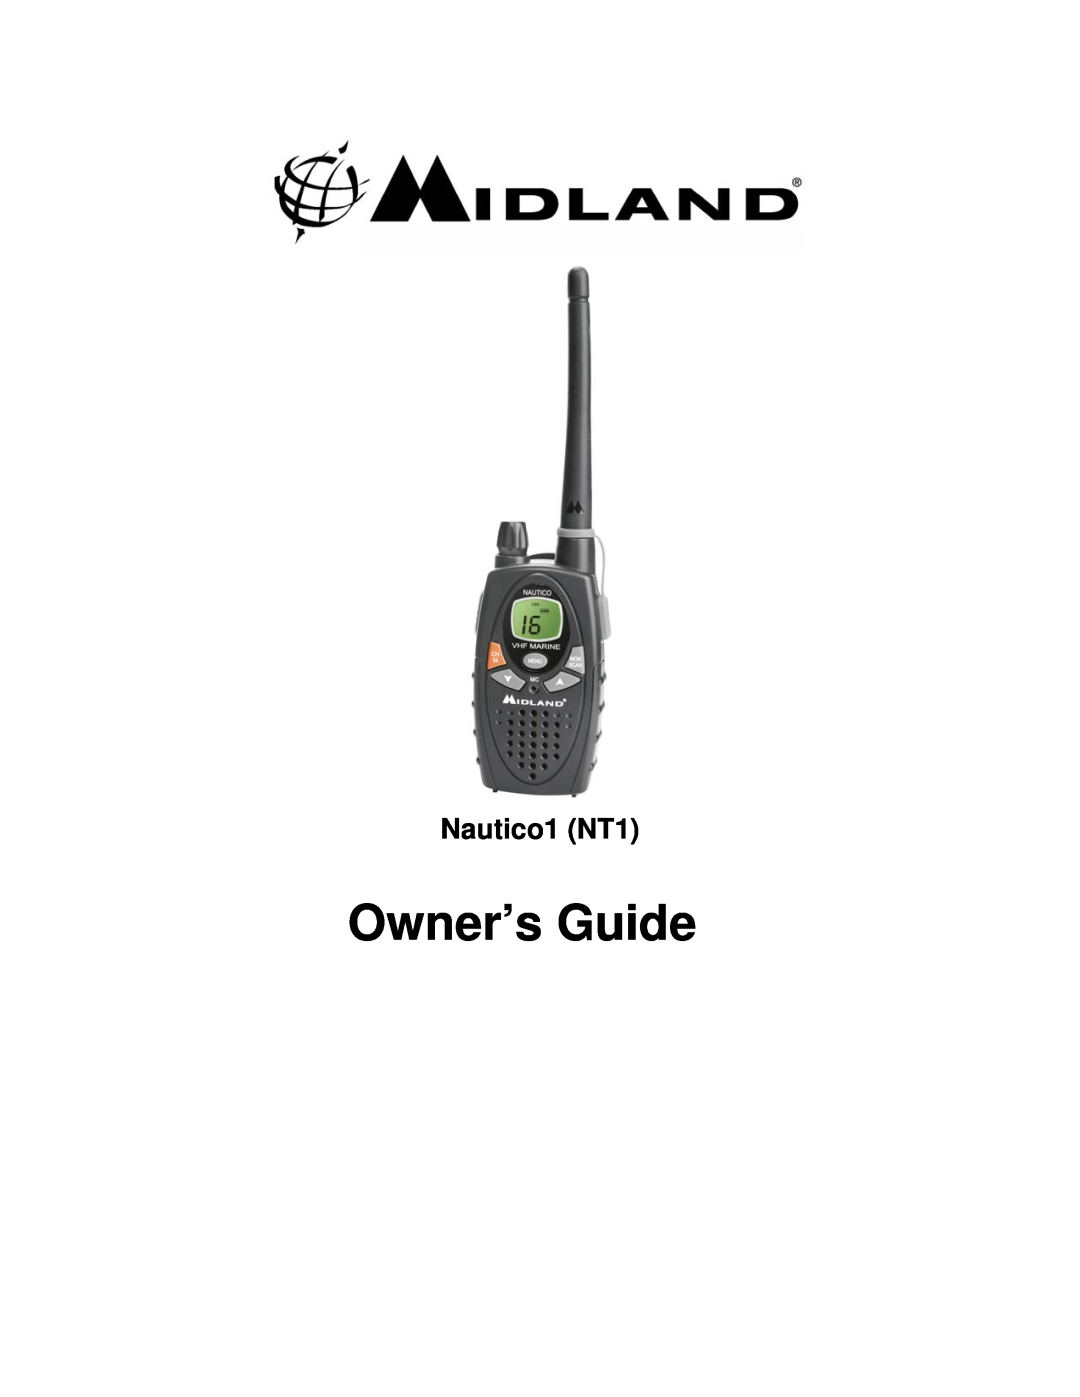 Midland Radio manual Owner’s Guide, Nautico1 NT1 